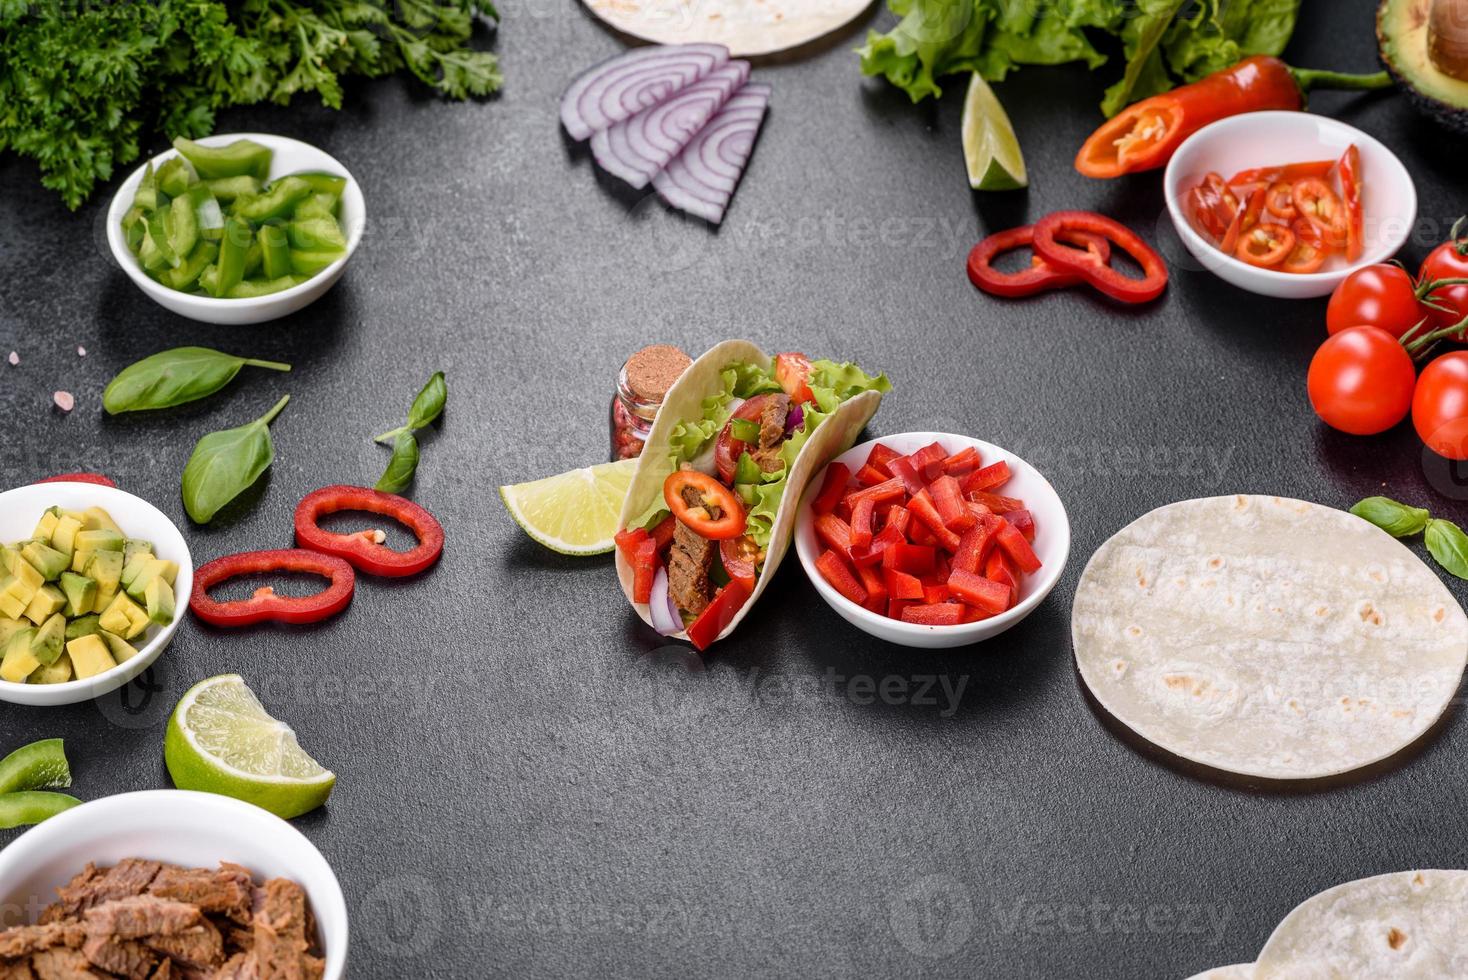 tacos mexicains avec boeuf, tomates, avocat, oignon et sauce salsa photo